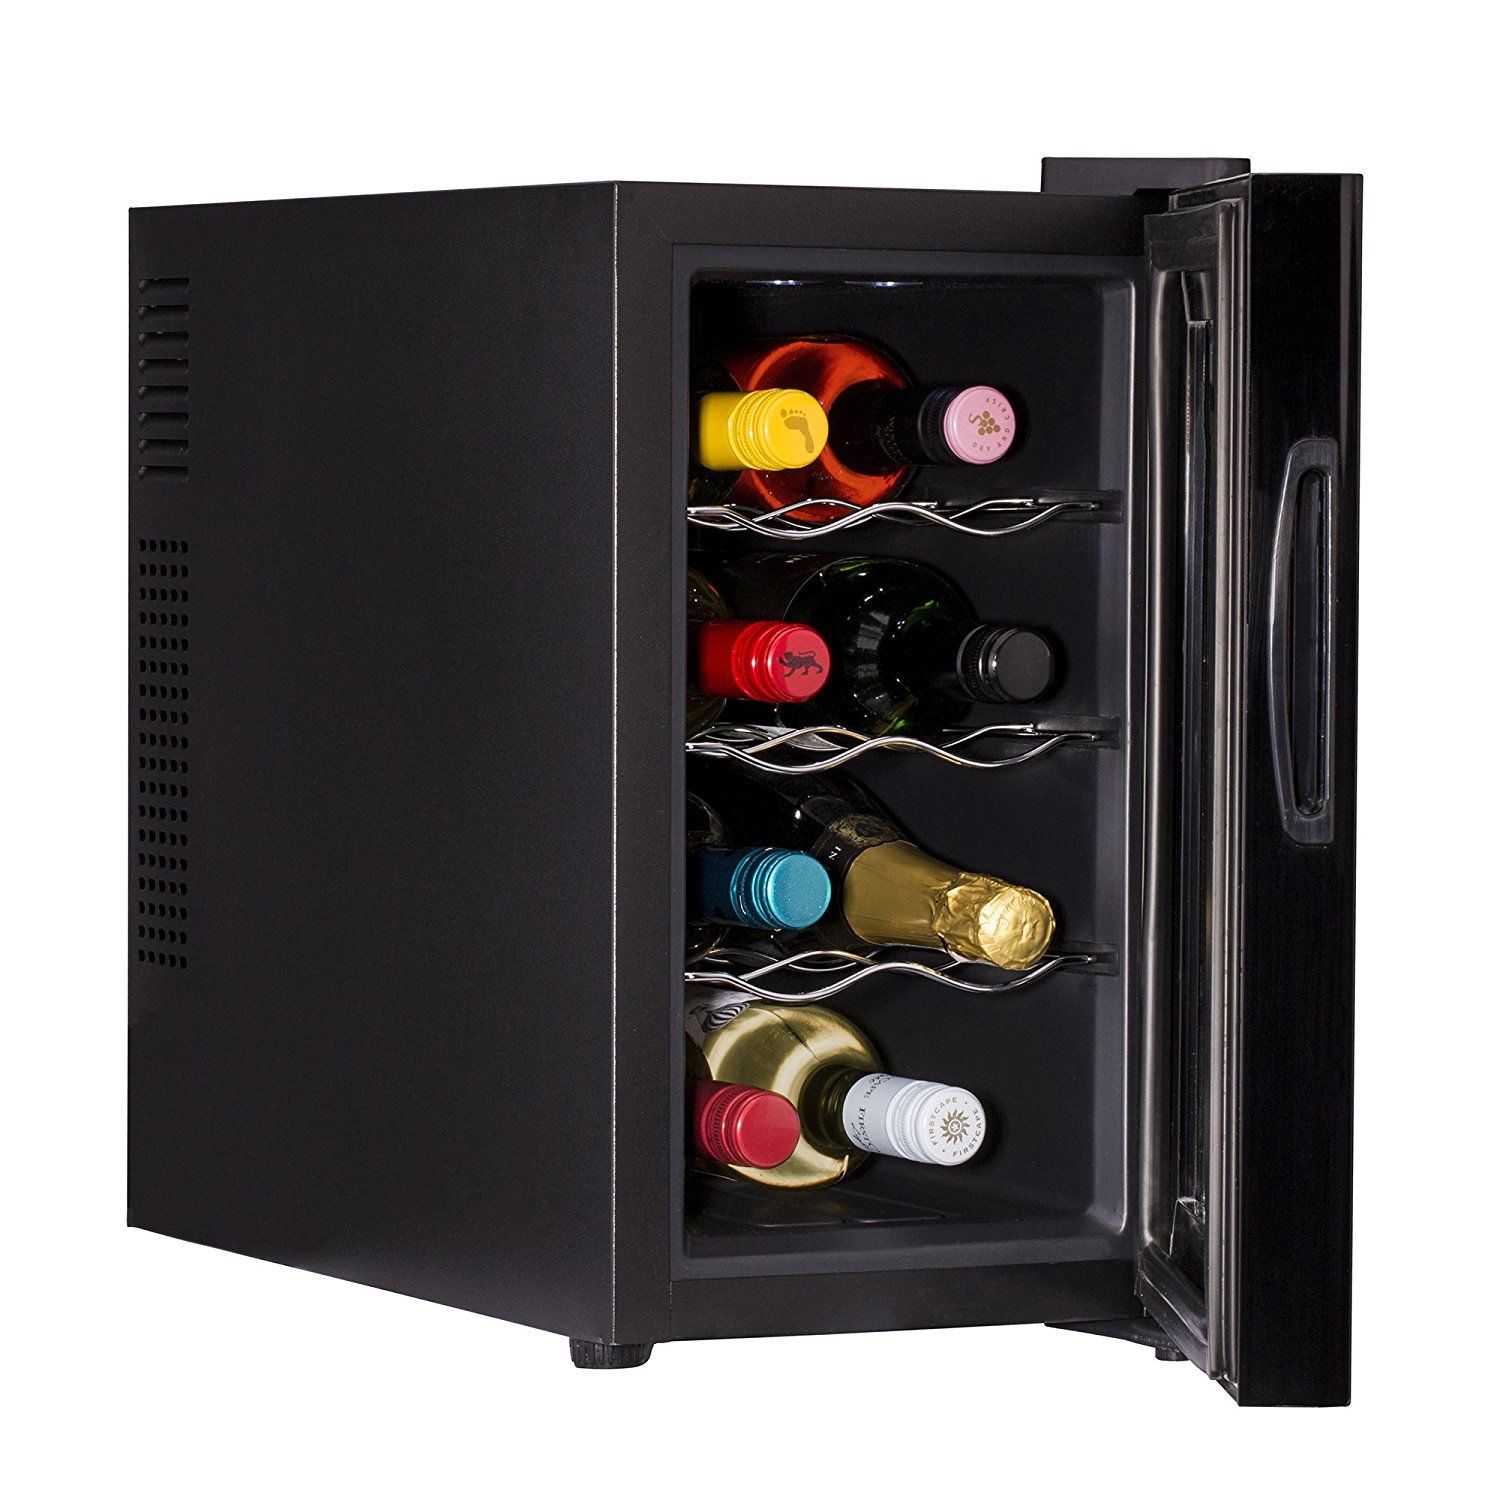 chigo wine fridge manual